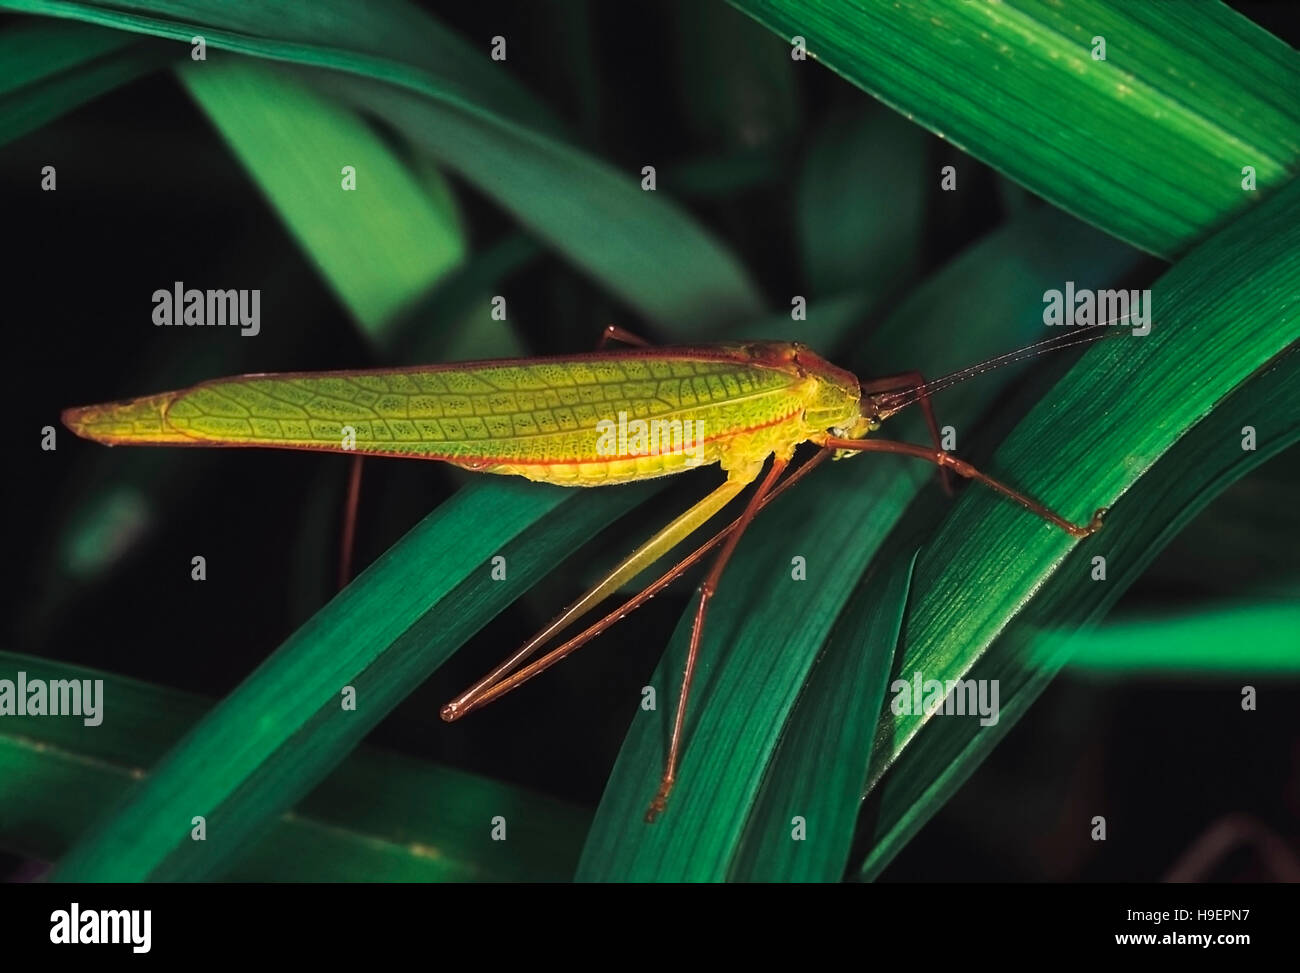 Green Long-horned Grasshopper. Arunachal Pradesh, India. Stock Photo